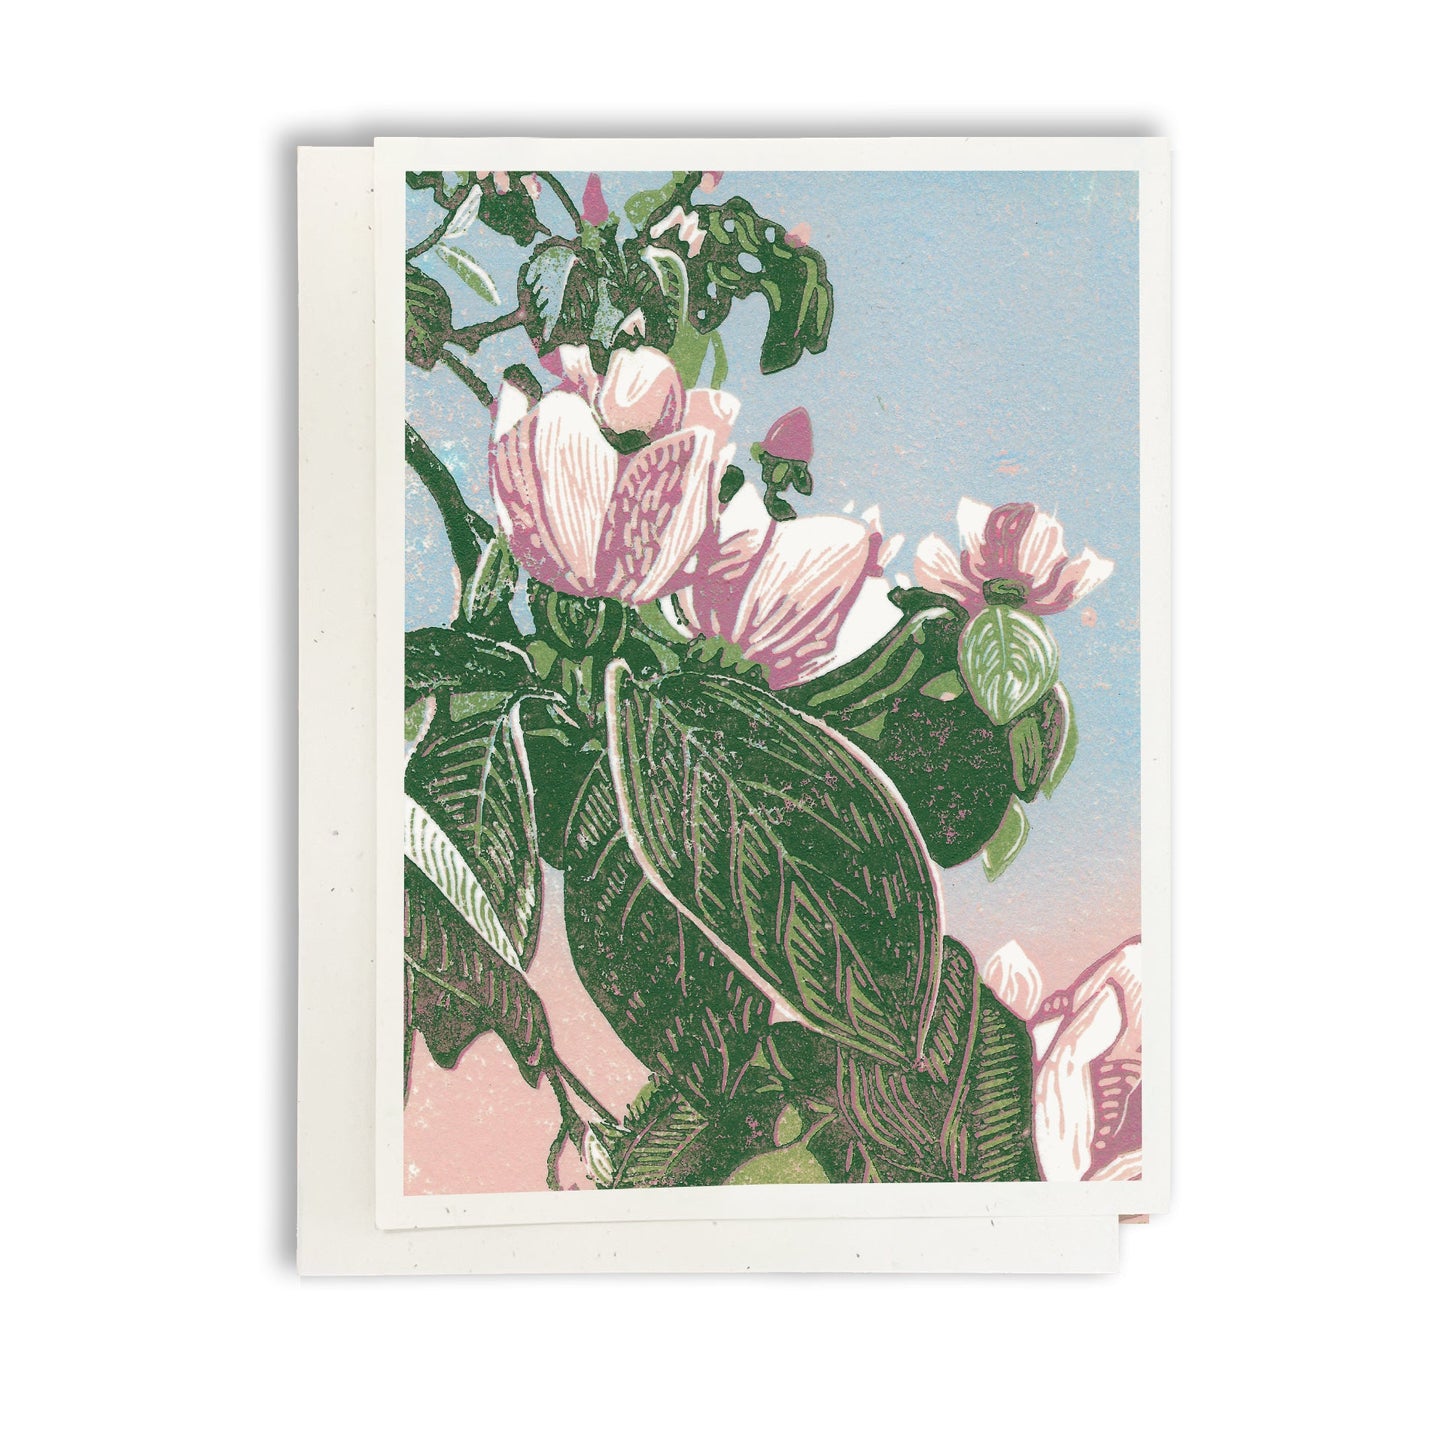 A casually elegant card featuring a digital reproductions of Natalia Wohletz's block print design titled En el Jardin.